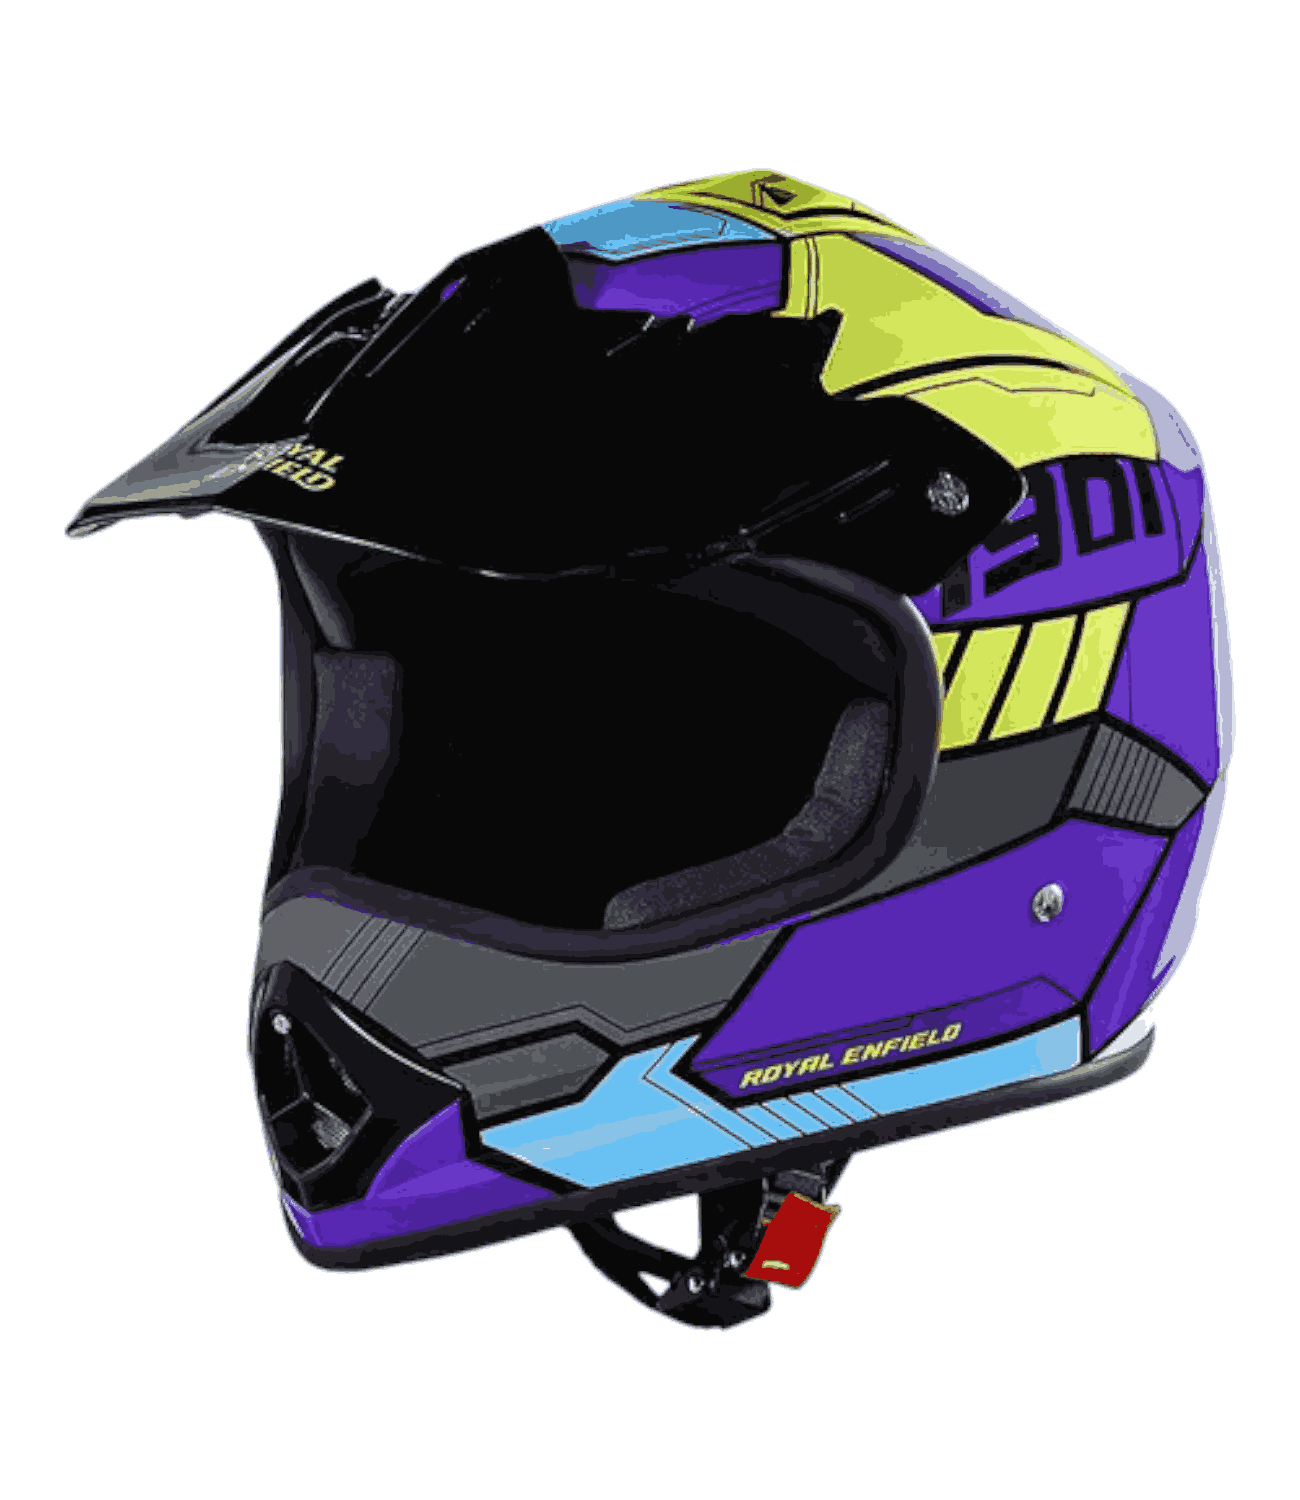 RE Motocross Kids Helmet - Purlple